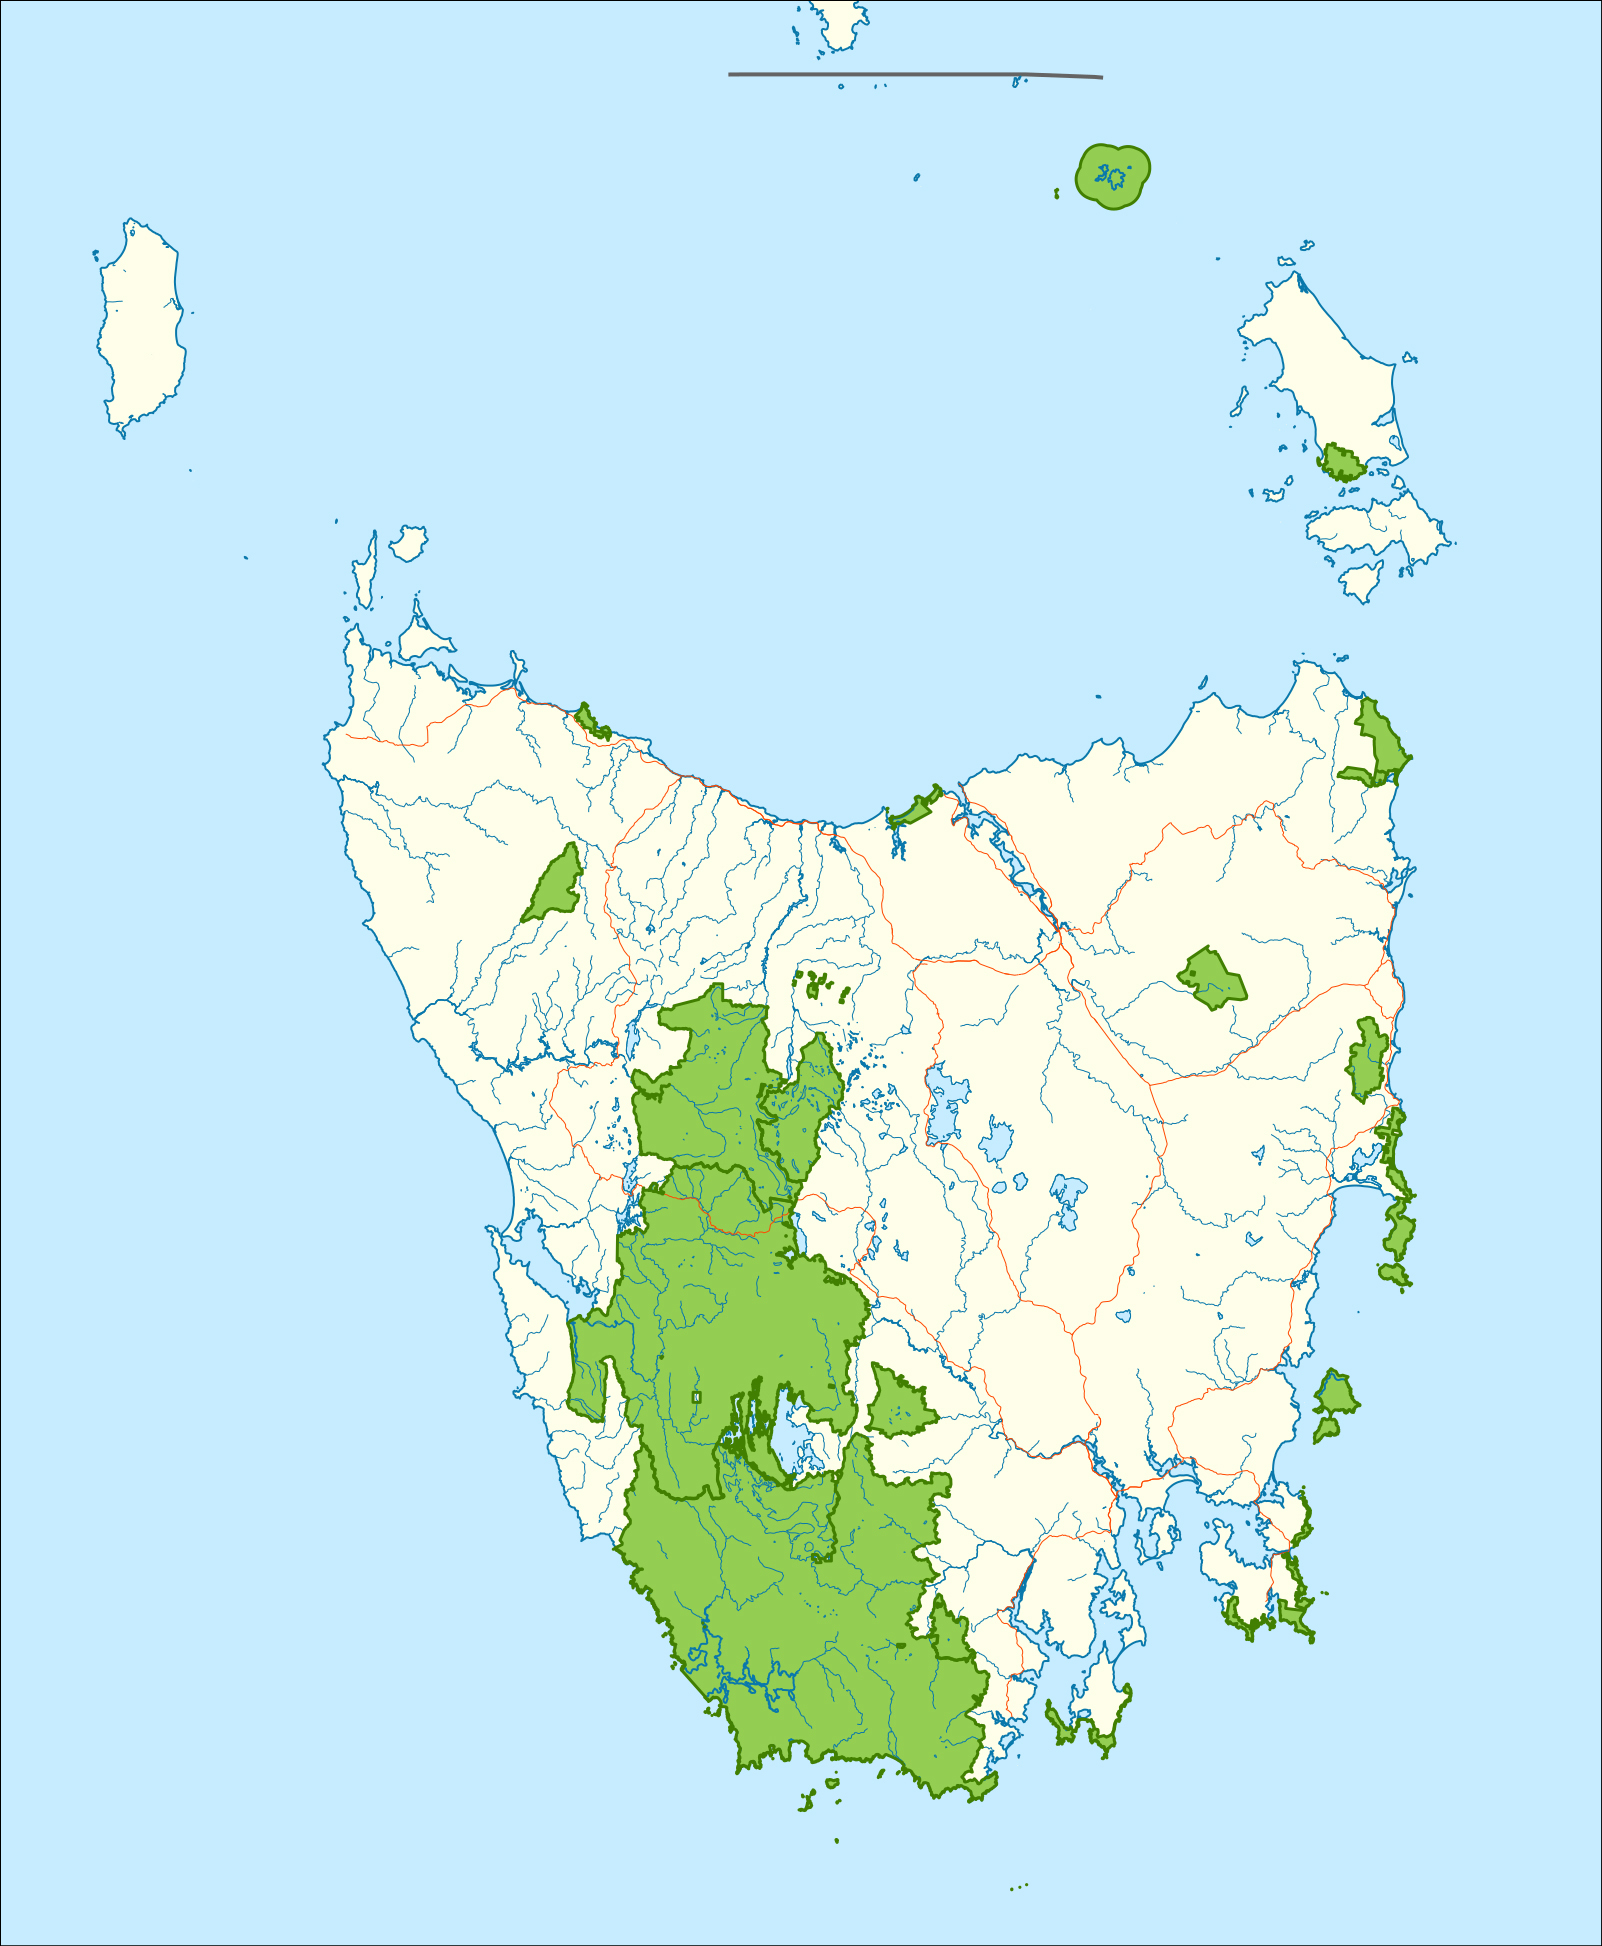 Tasmanian national parks map (national parks show in green).